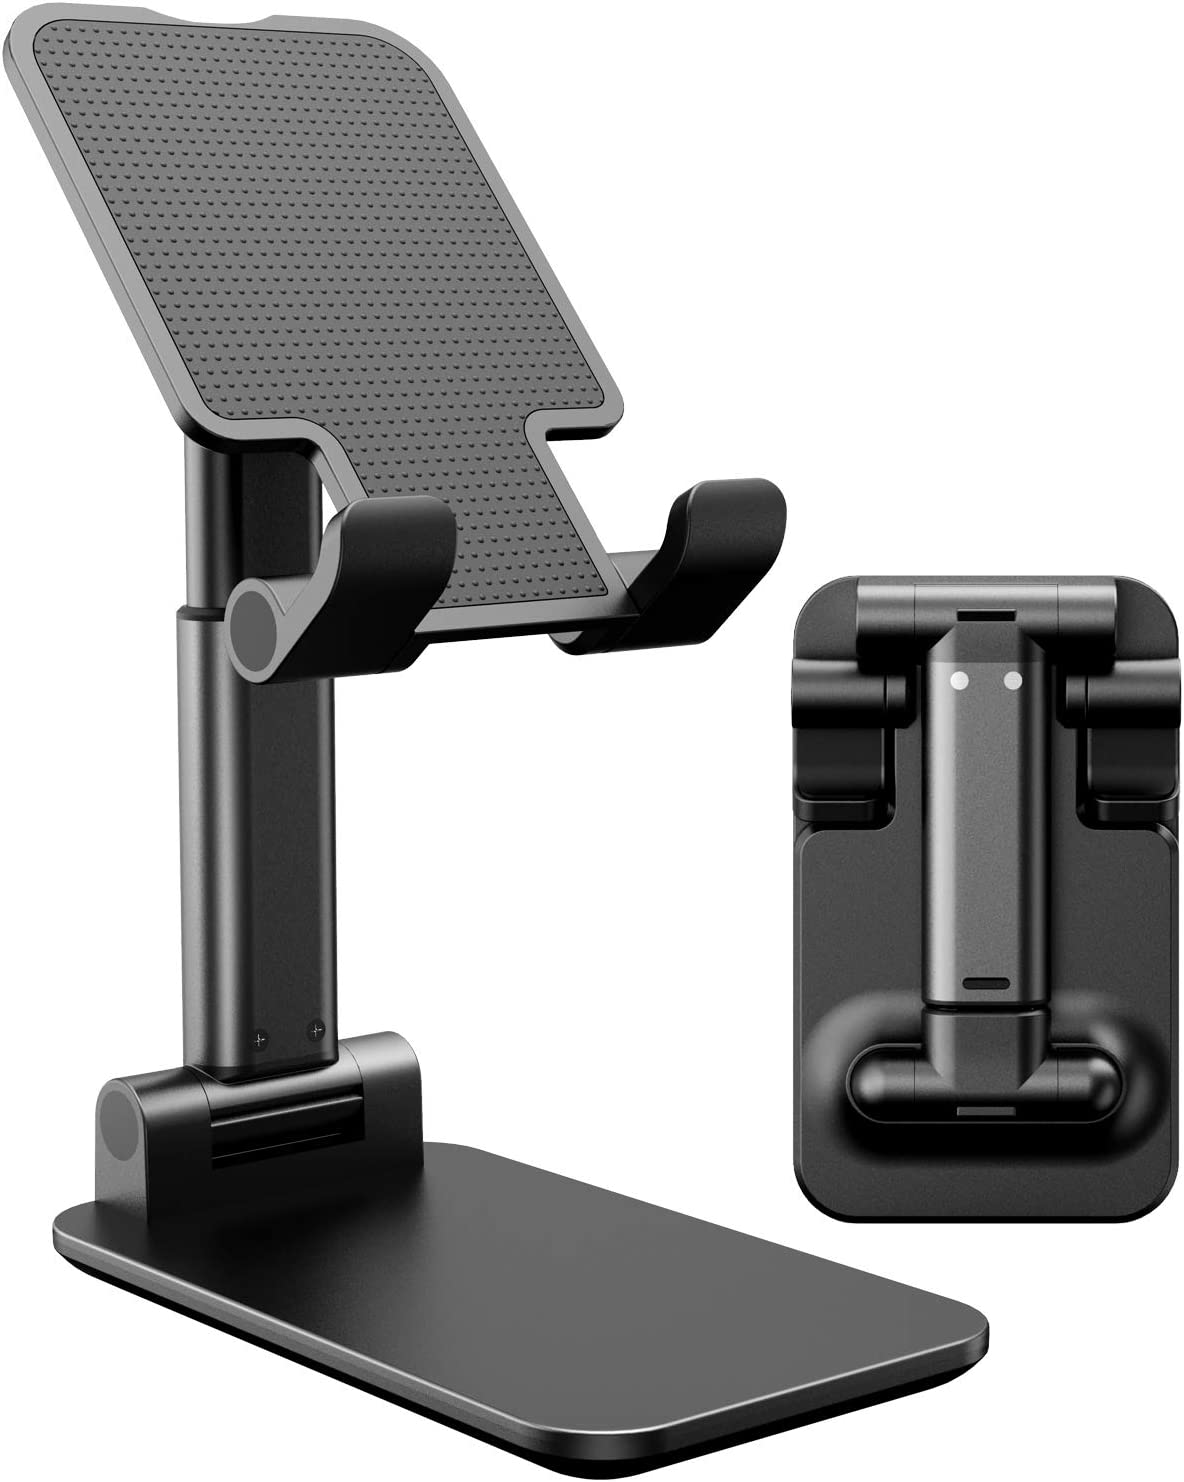 Cellphone Stand Adjustable Portable Desktop Phone Stand Cell Phone Foldable Support 